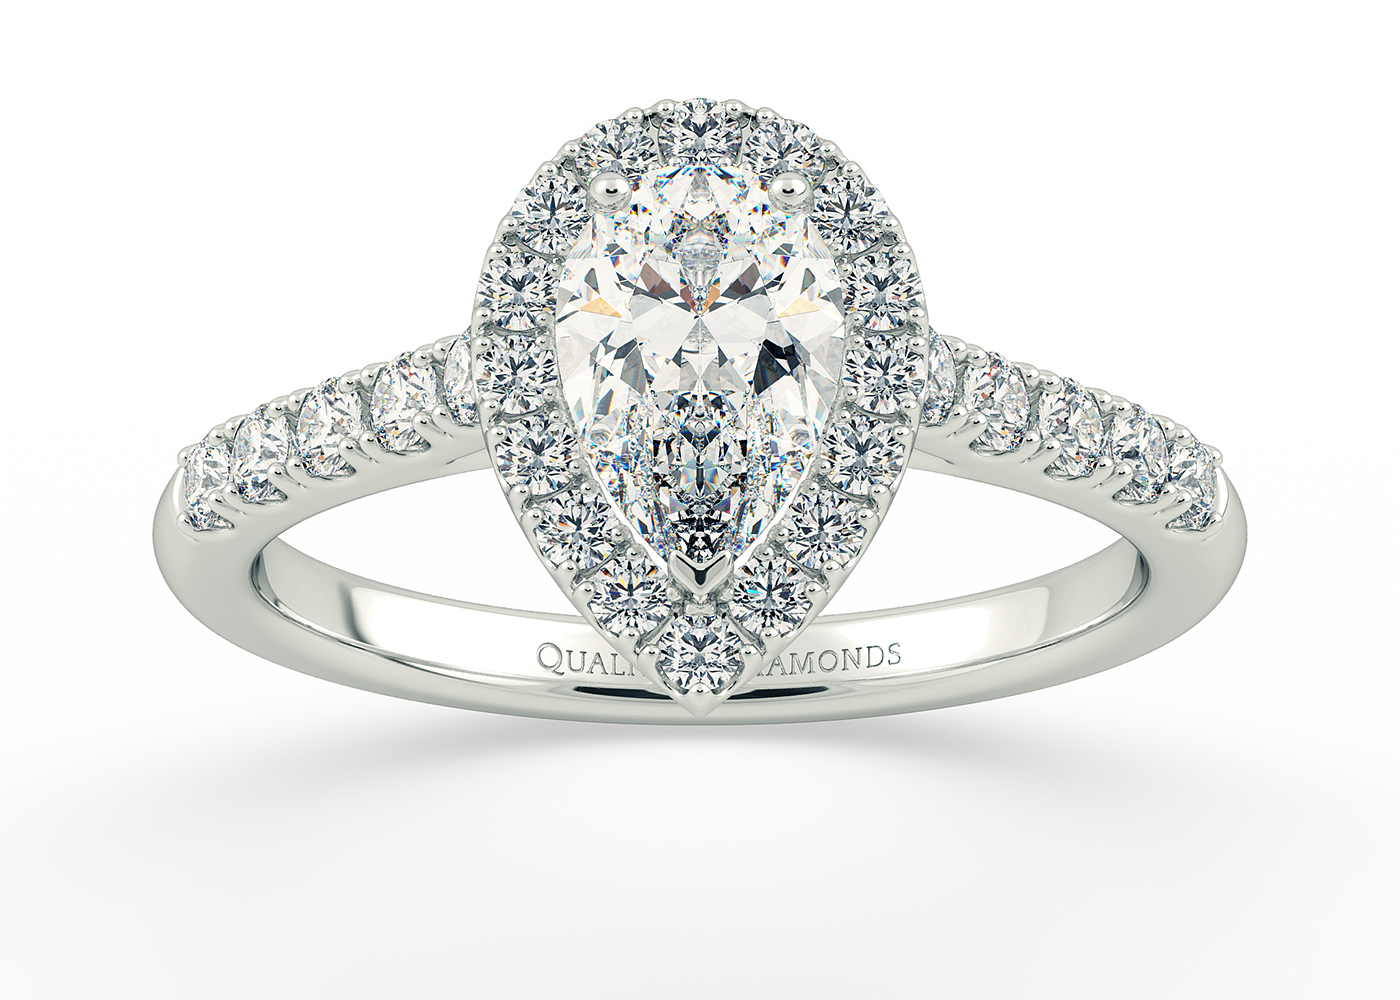 Two Carat Halo Pear Diamond Ring in Platinum 950